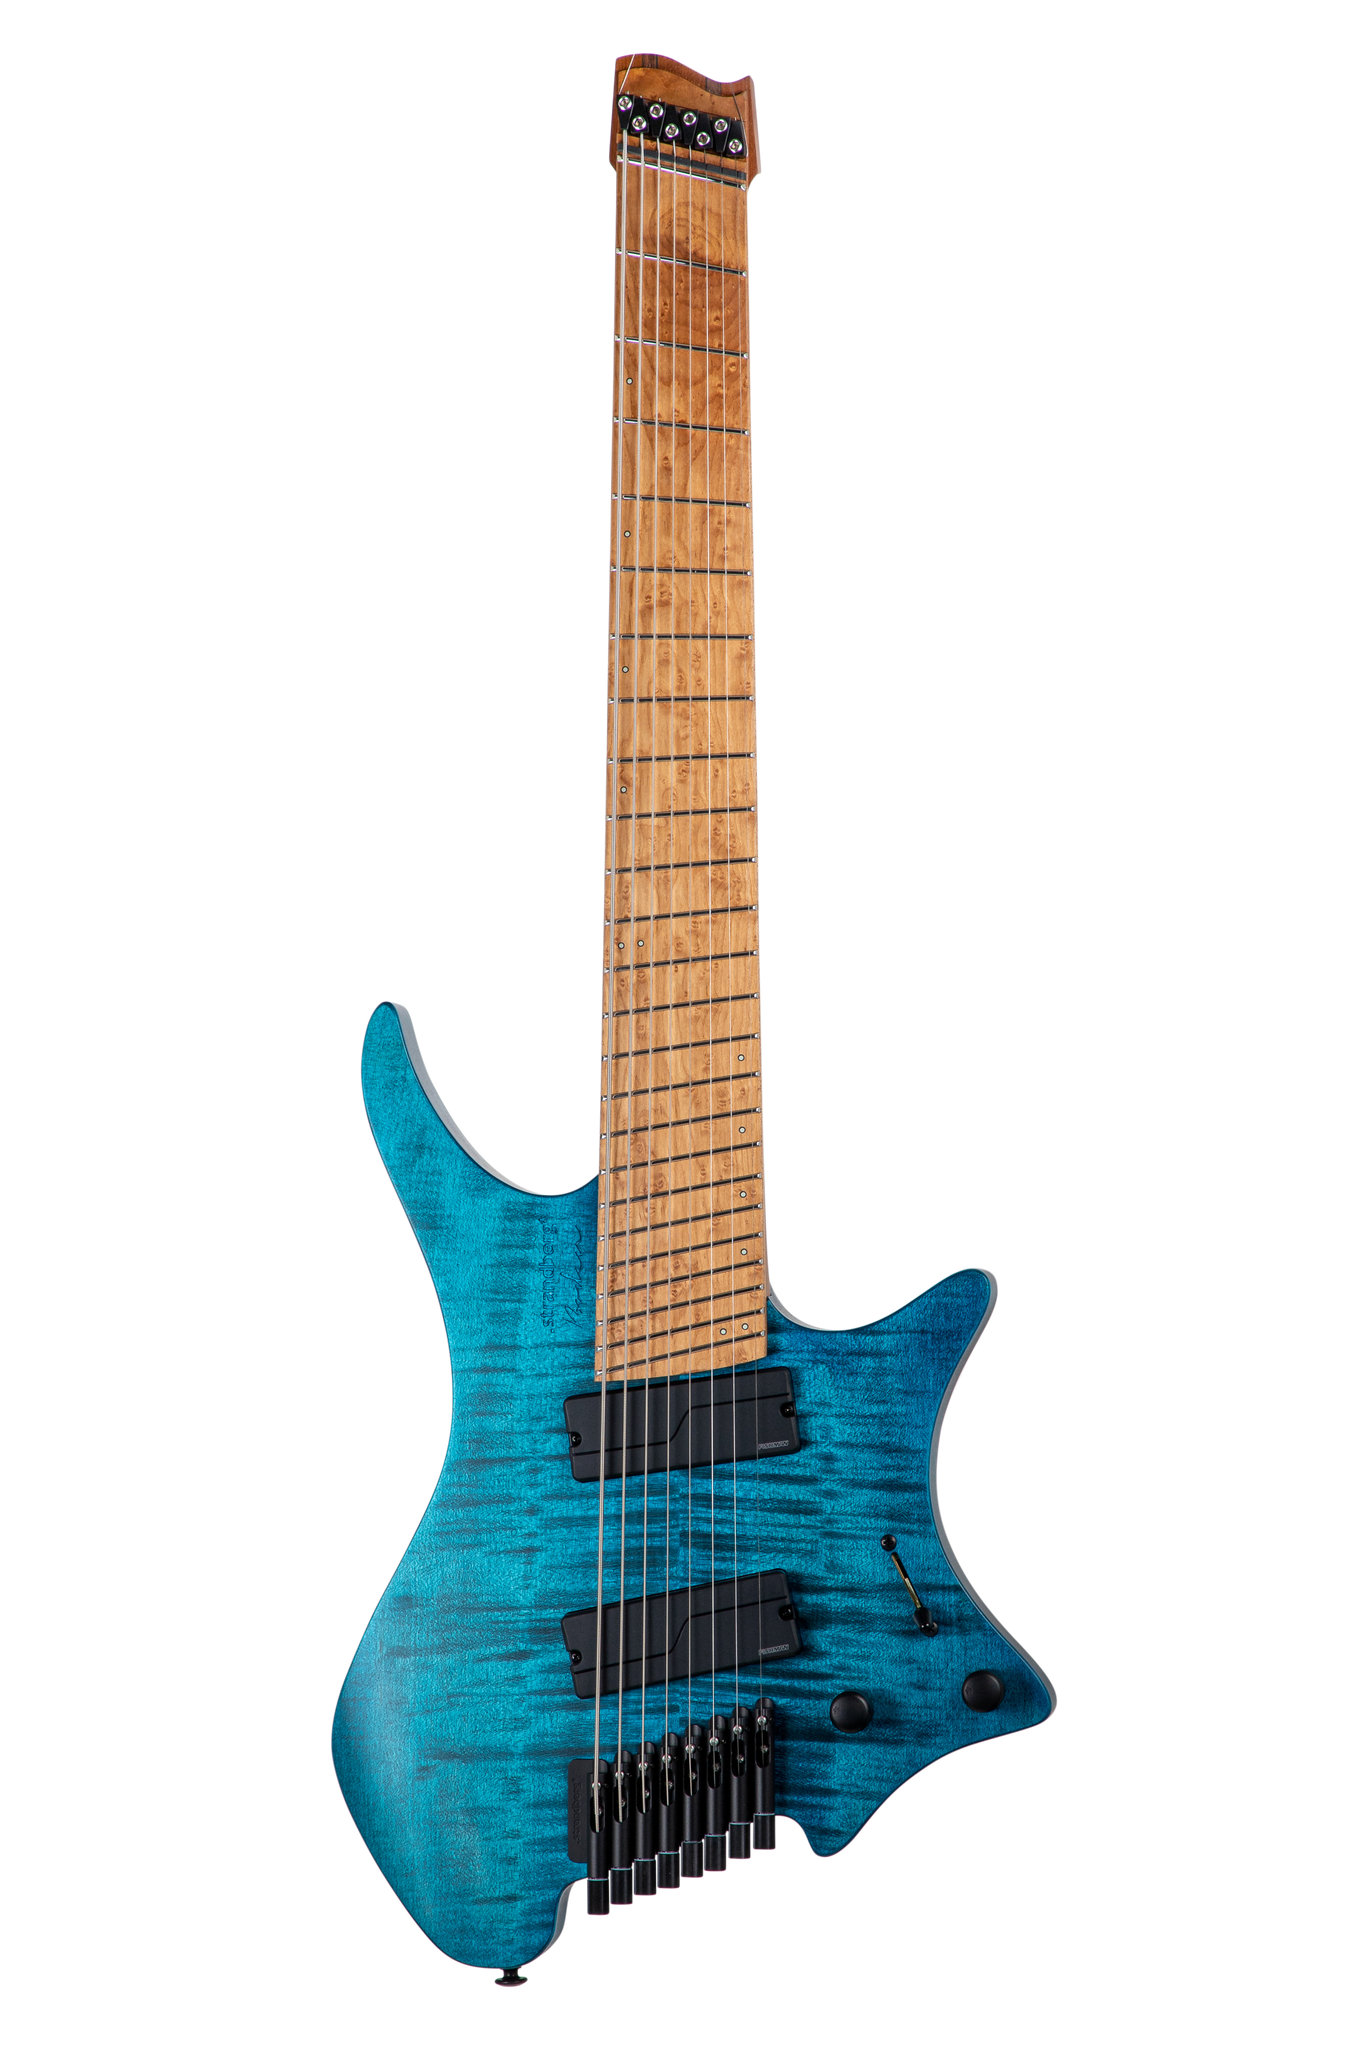 Boden Original 8 Blue B-Stock | .strandberg* Guitars